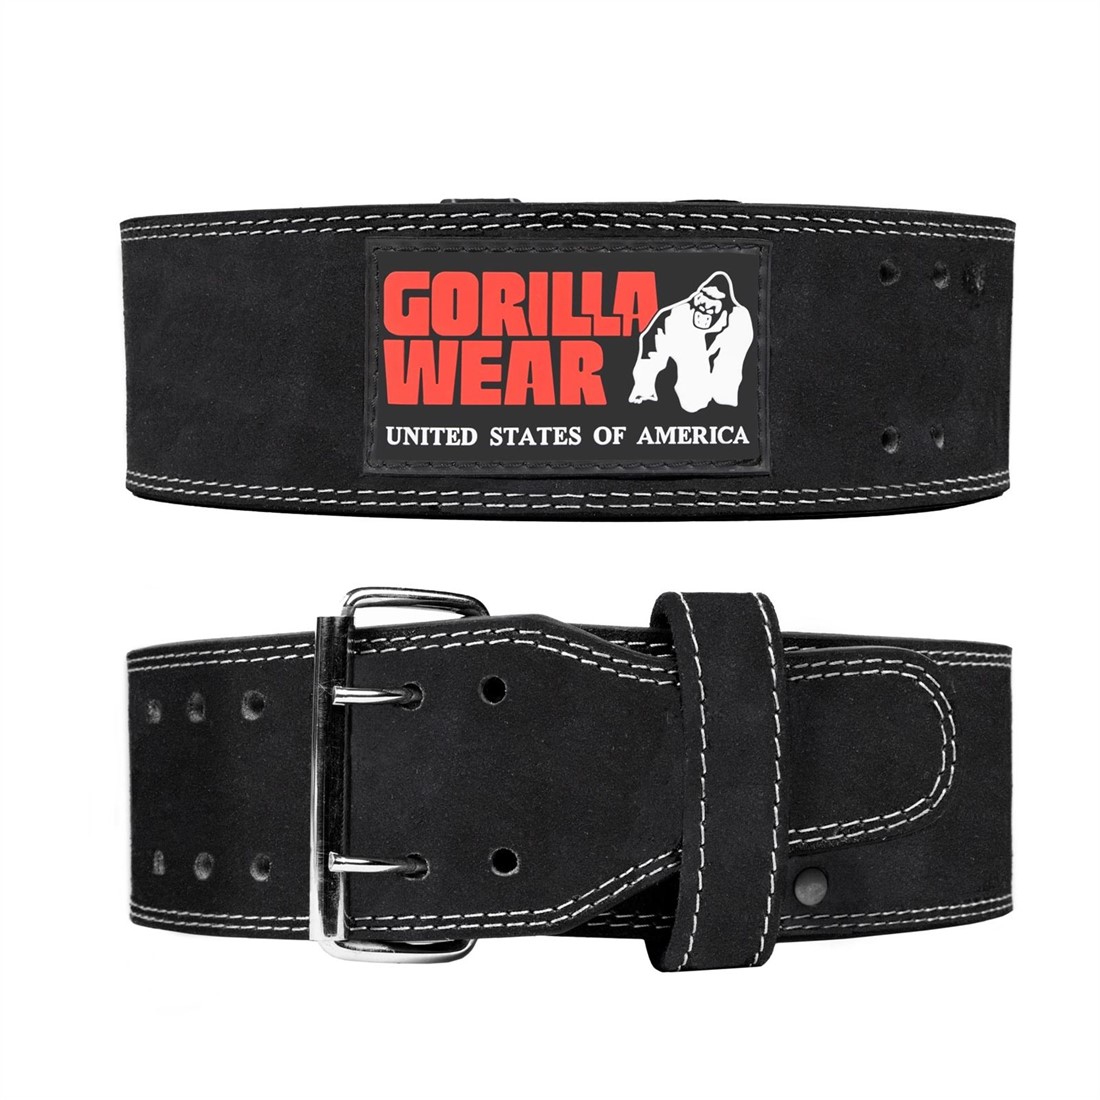 Gorilla Wear 4 Inch Leather Lifting Belt - Black